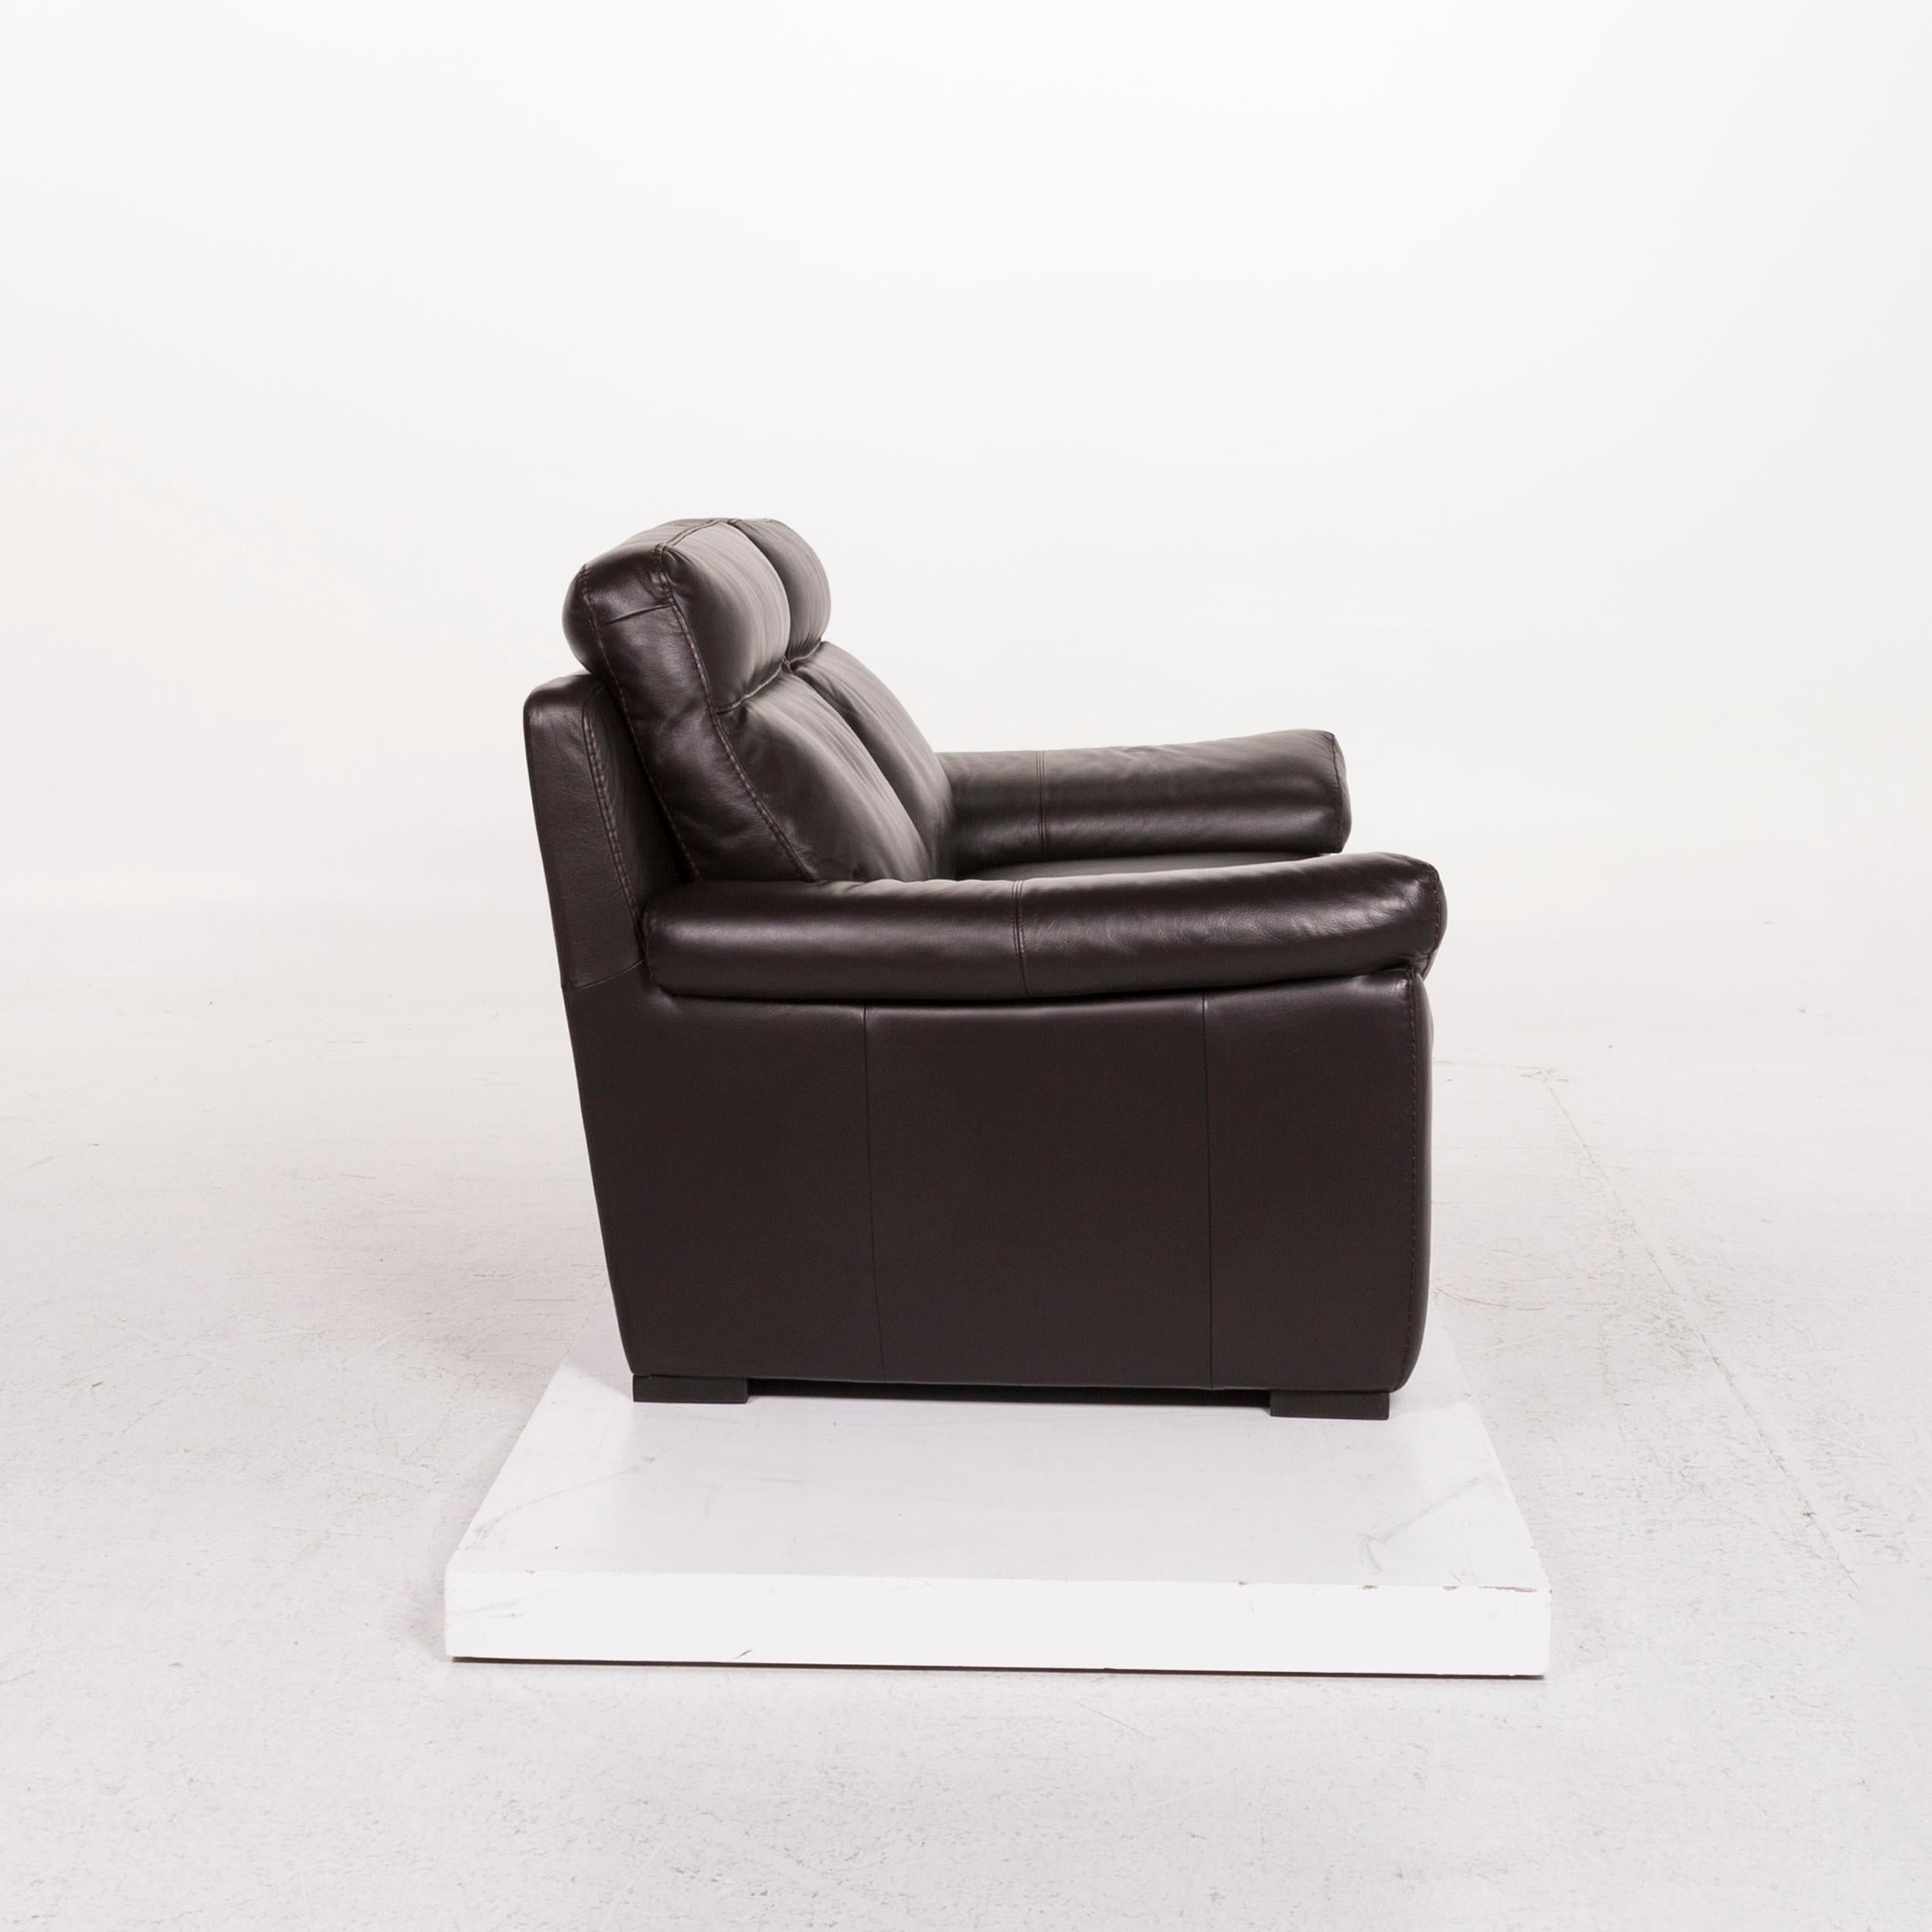 Italian Natuzzi Leather Sofa Brown Dark Brown Two-Seat Couch